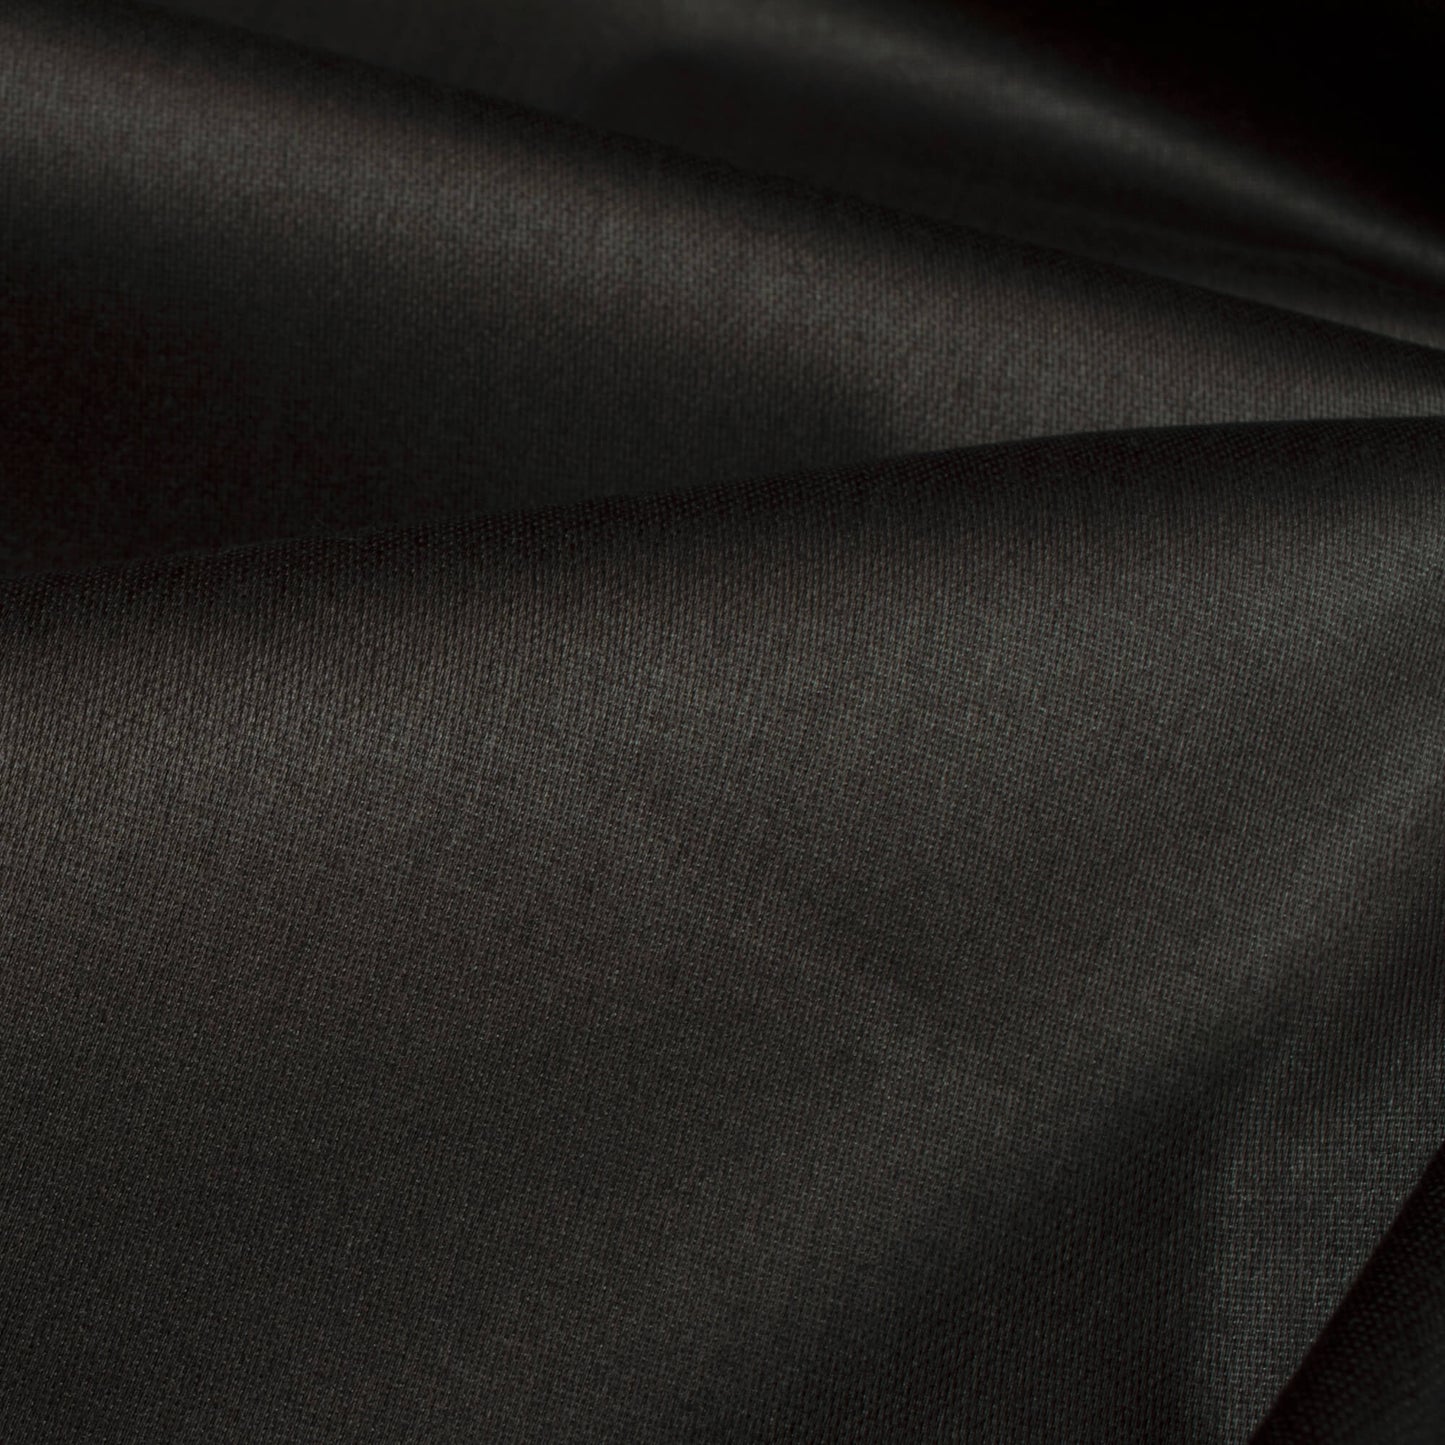 Black Plain Glazed Cotton Fabric